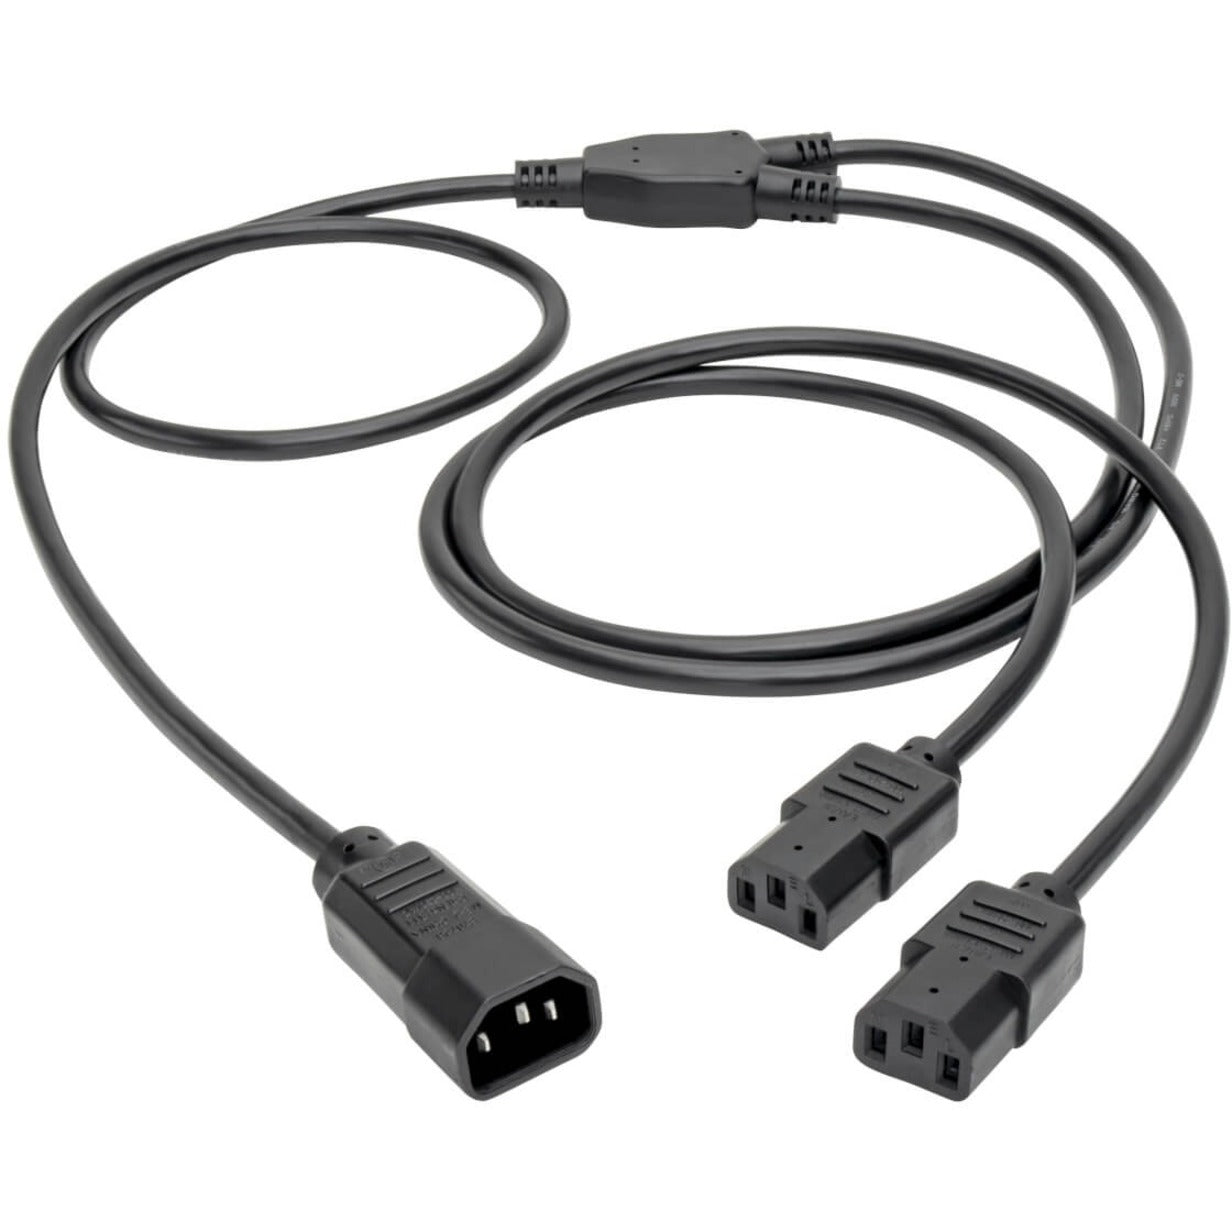 Tripp Lite P004-006-2C13 Splitter Cable, 6 ft, 10A, 110V AC/220V AC